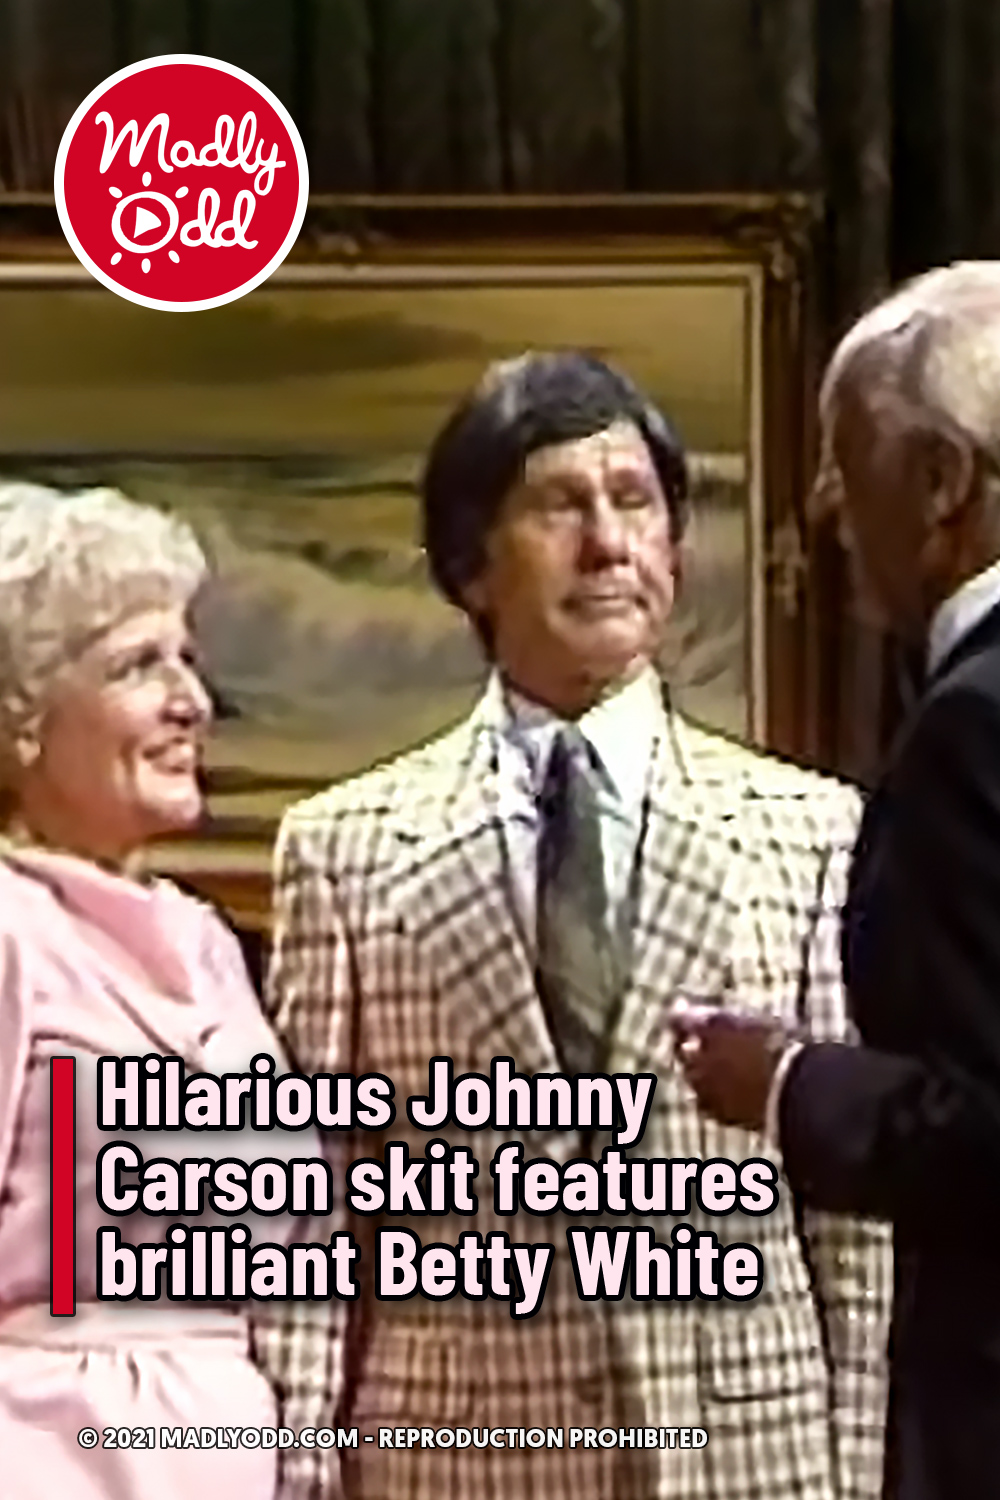 Hilarious Johnny Carson skit features brilliant Betty White